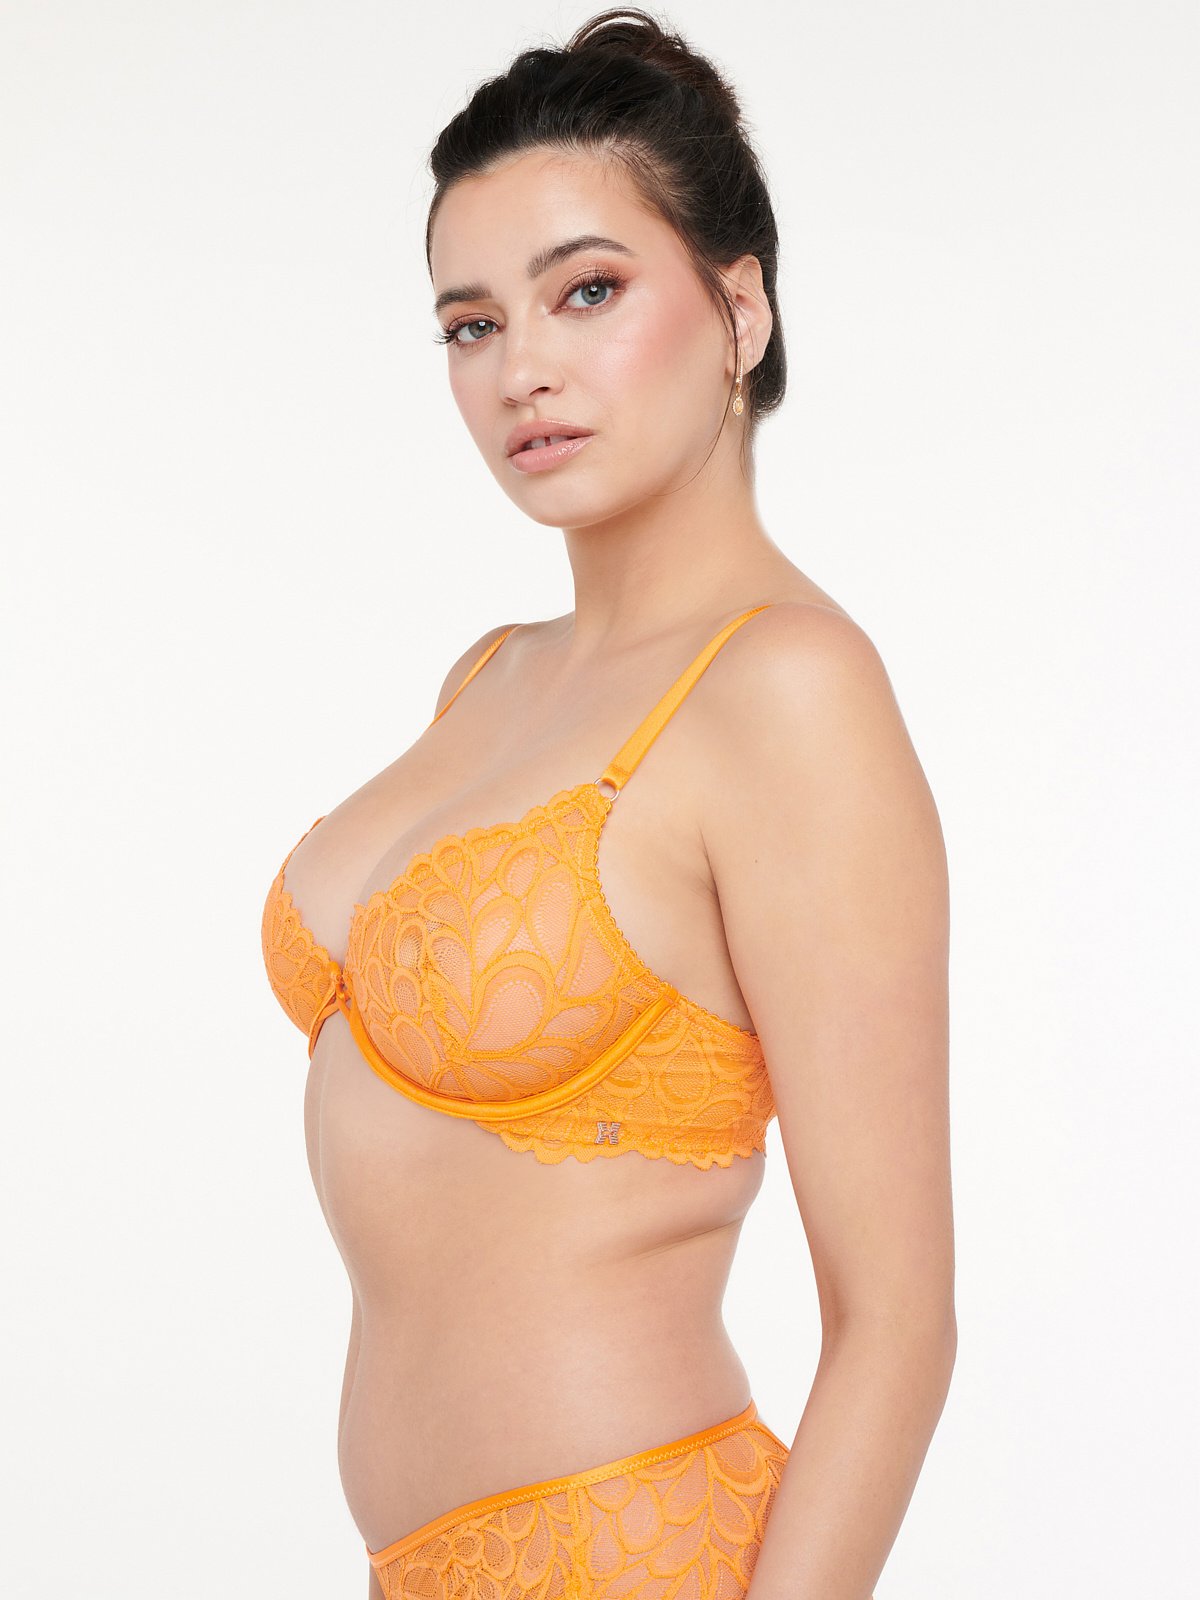 Orange lace comfy bra size 32DD bundle like new, Women's Fashion